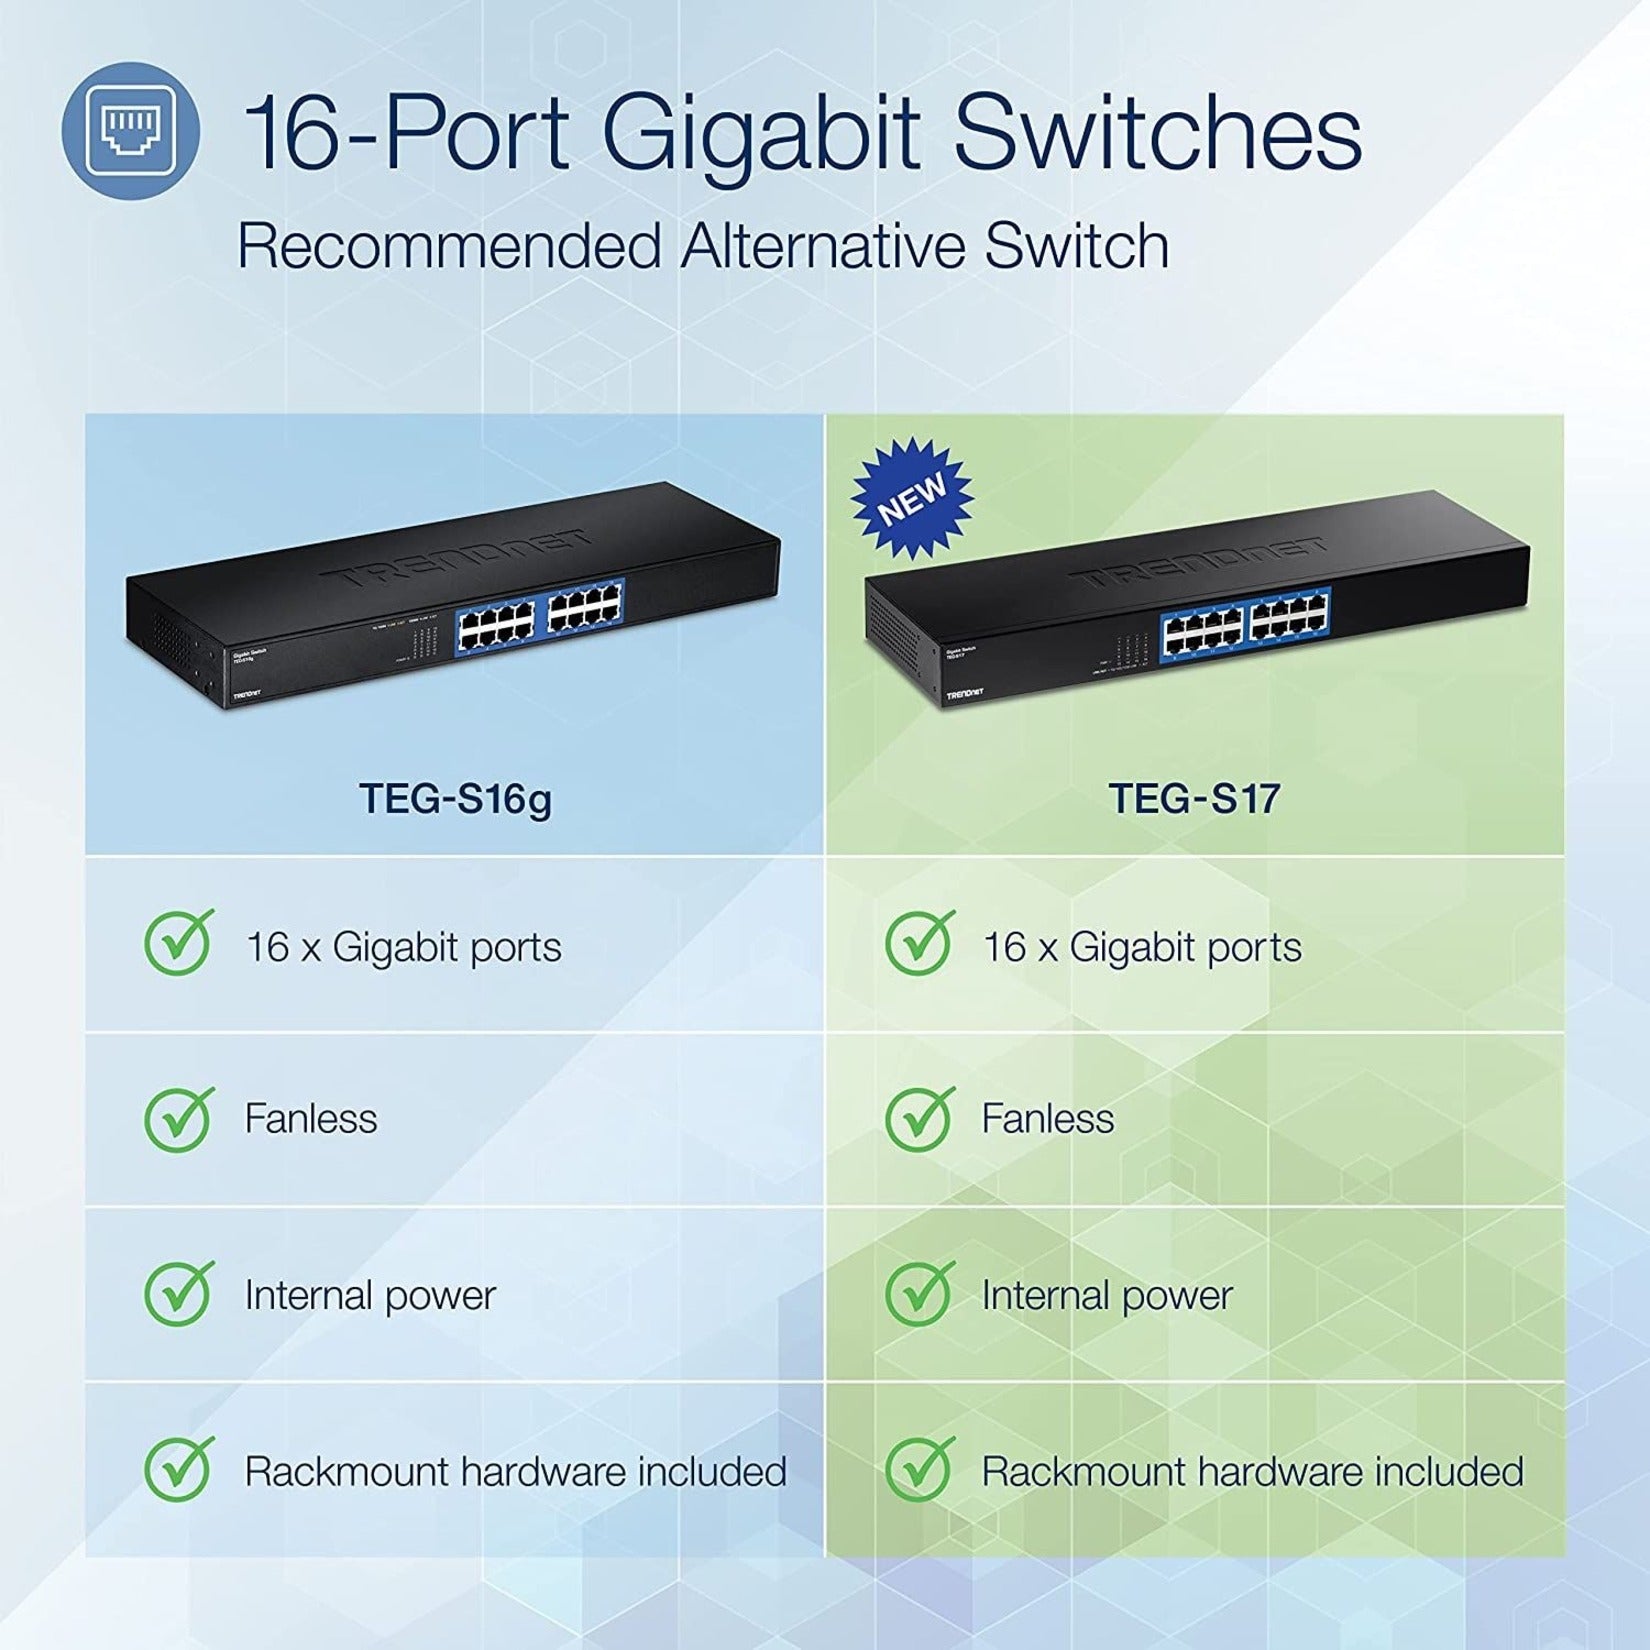 TRENDnet TEG-S17 16-Port Gigabit Switch, Metal Enclosure, Lifetime Protection, Black